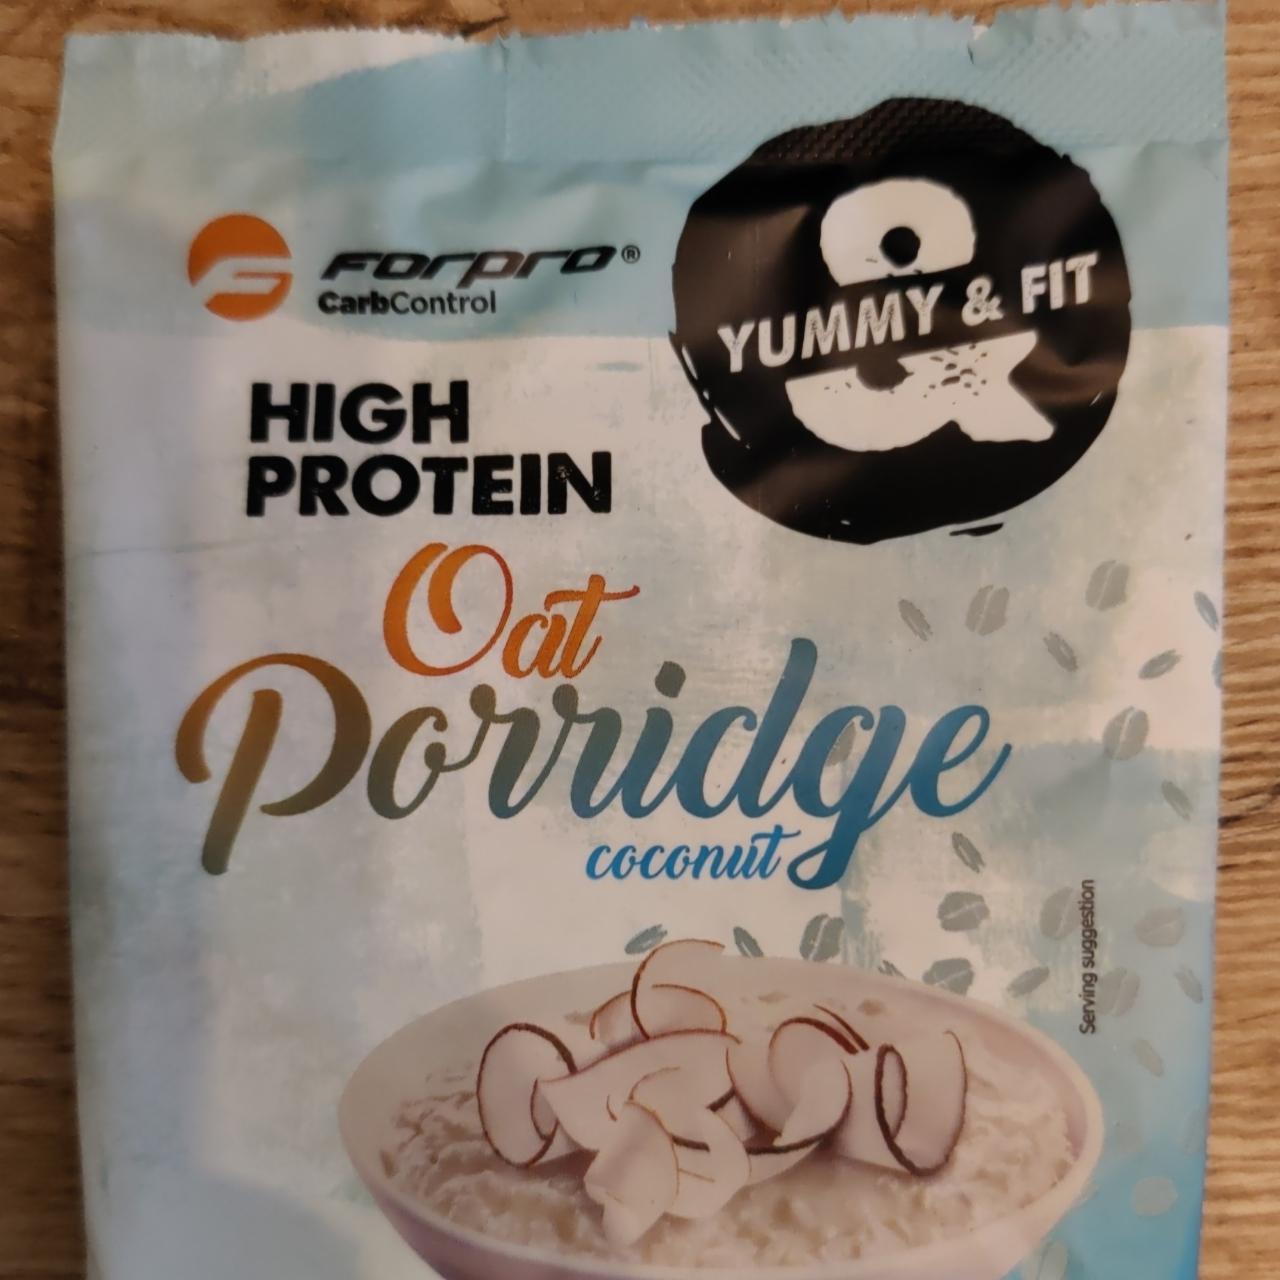 Képek - Oat porridge high protein Forpro